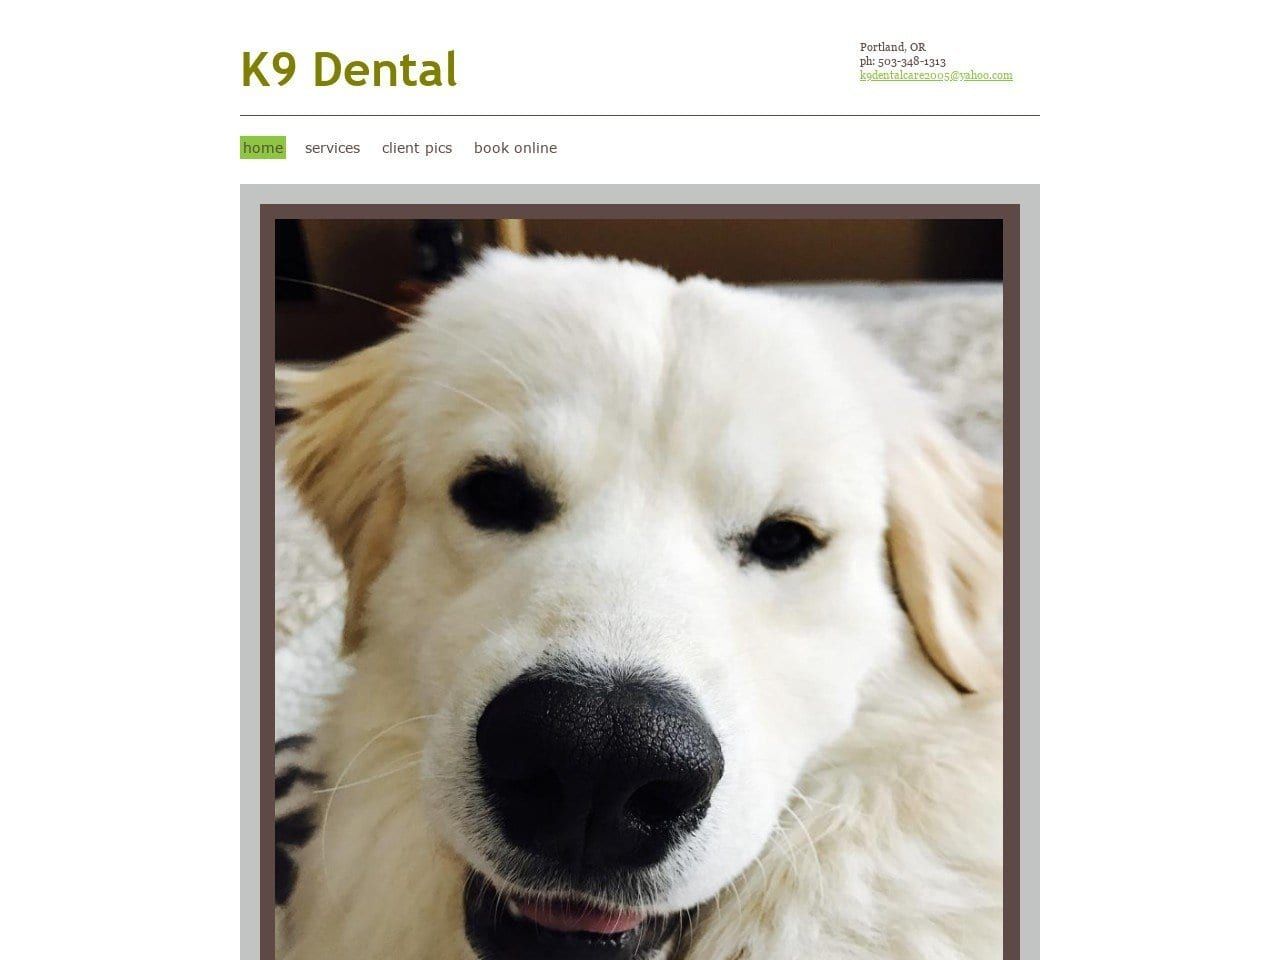 K9 Dental Website Screenshot from k9dental.net